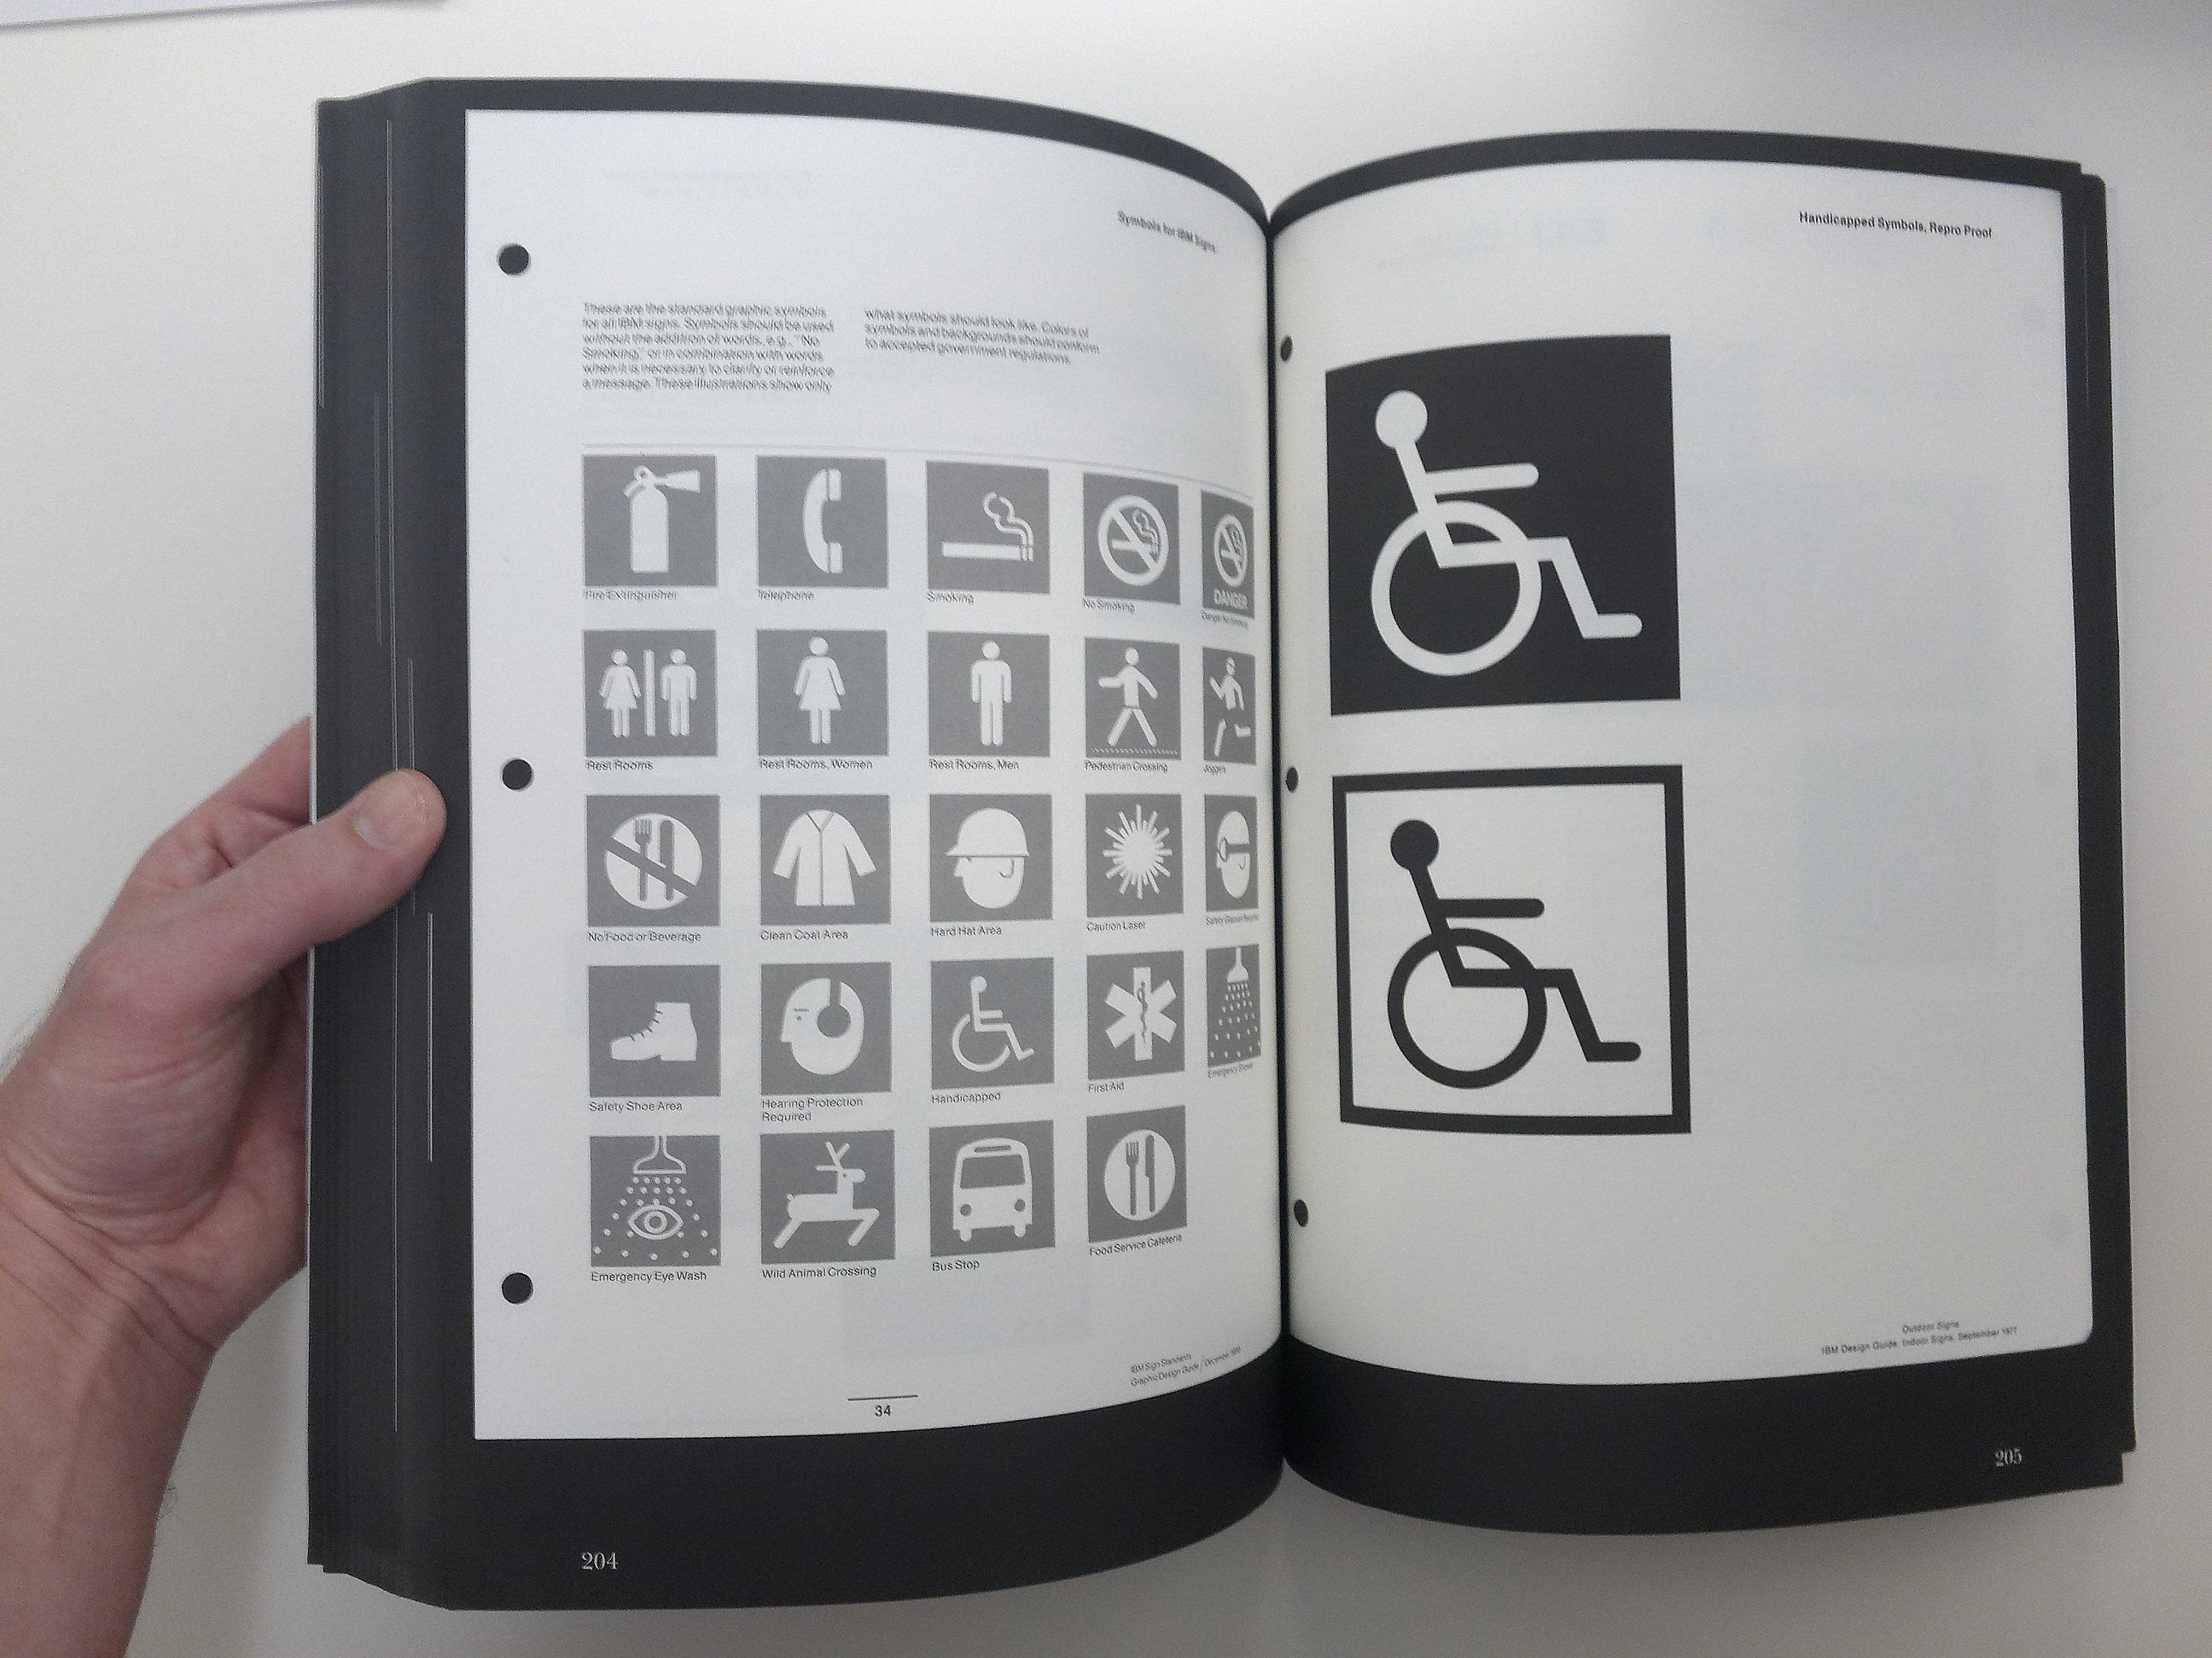 IBM Graphic Standards Manual reprint | Paul Rand: Modernist Master 